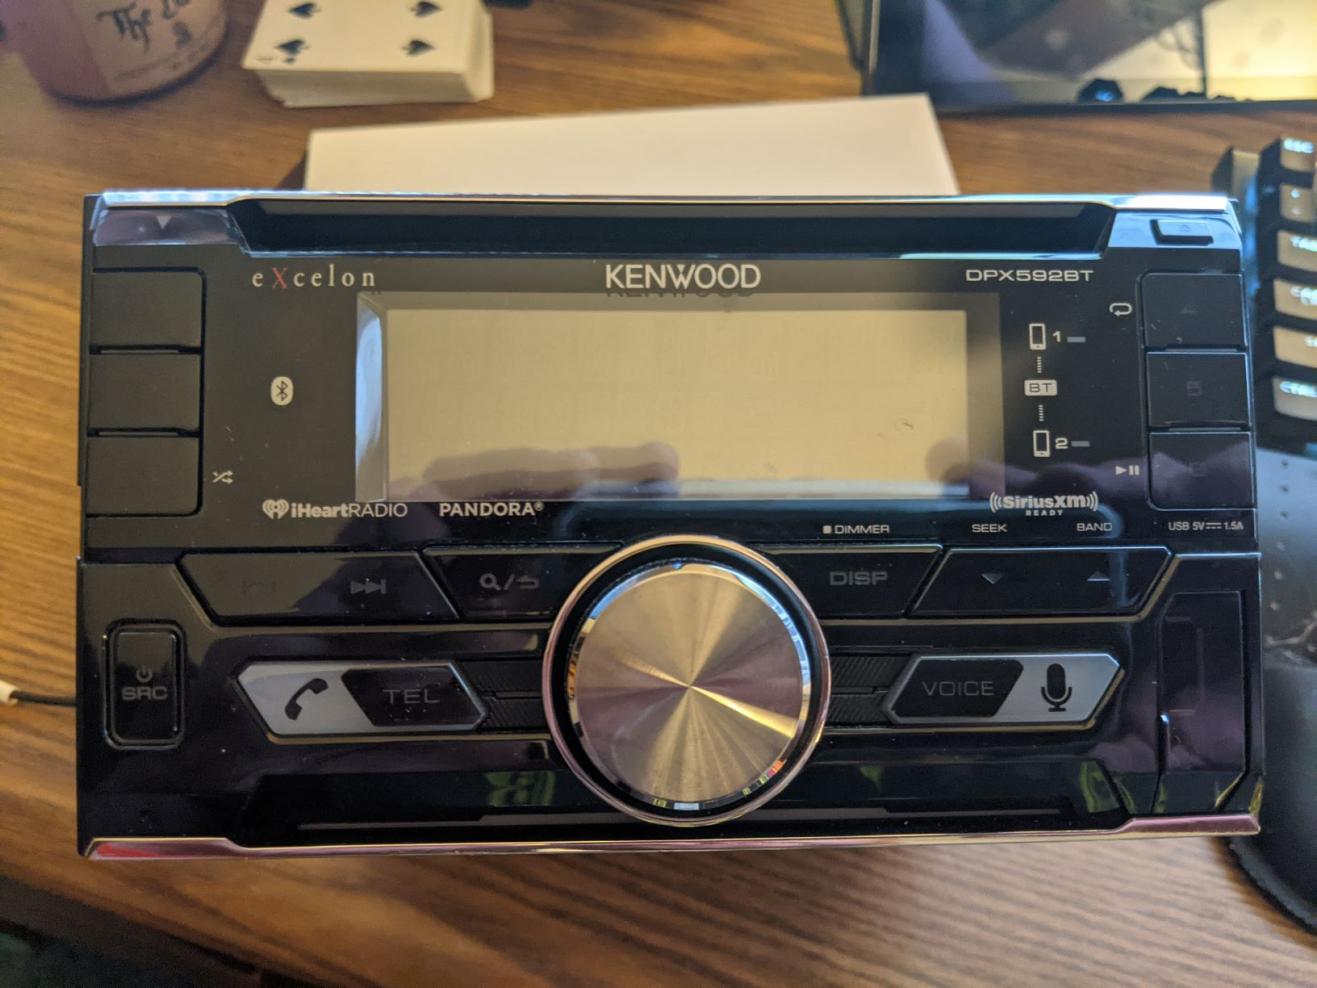 FS - Kenwood DPX592BT Double Din Radio w/Toyota Harness - 0 shipped-pxl_20210329_024139232_s-jpg